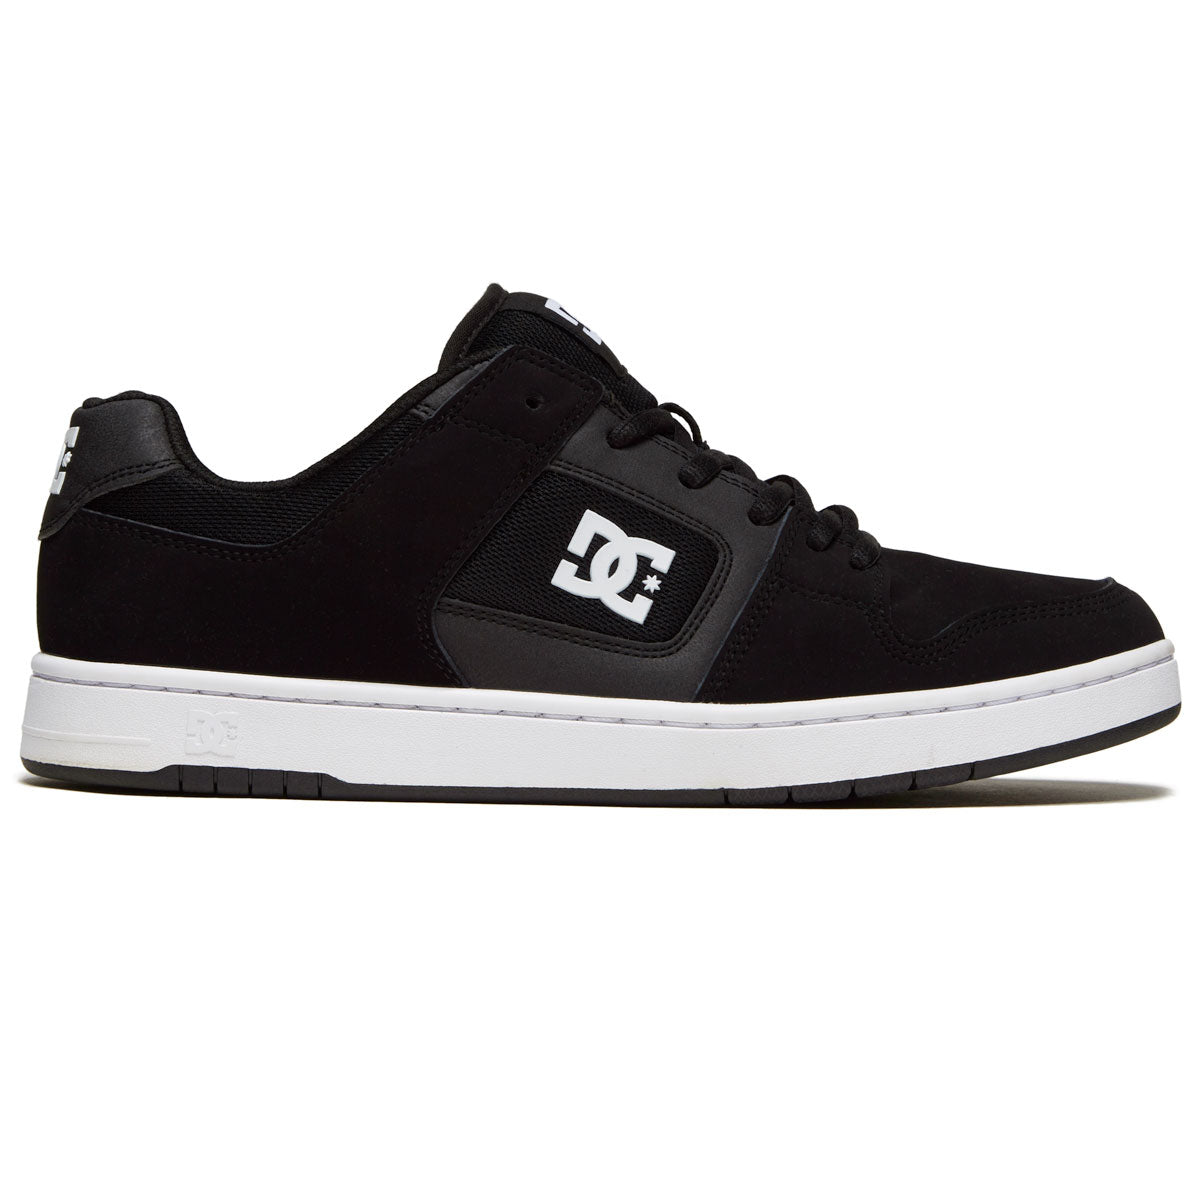 DC Manteca 4 Shoes - Black/White image 1